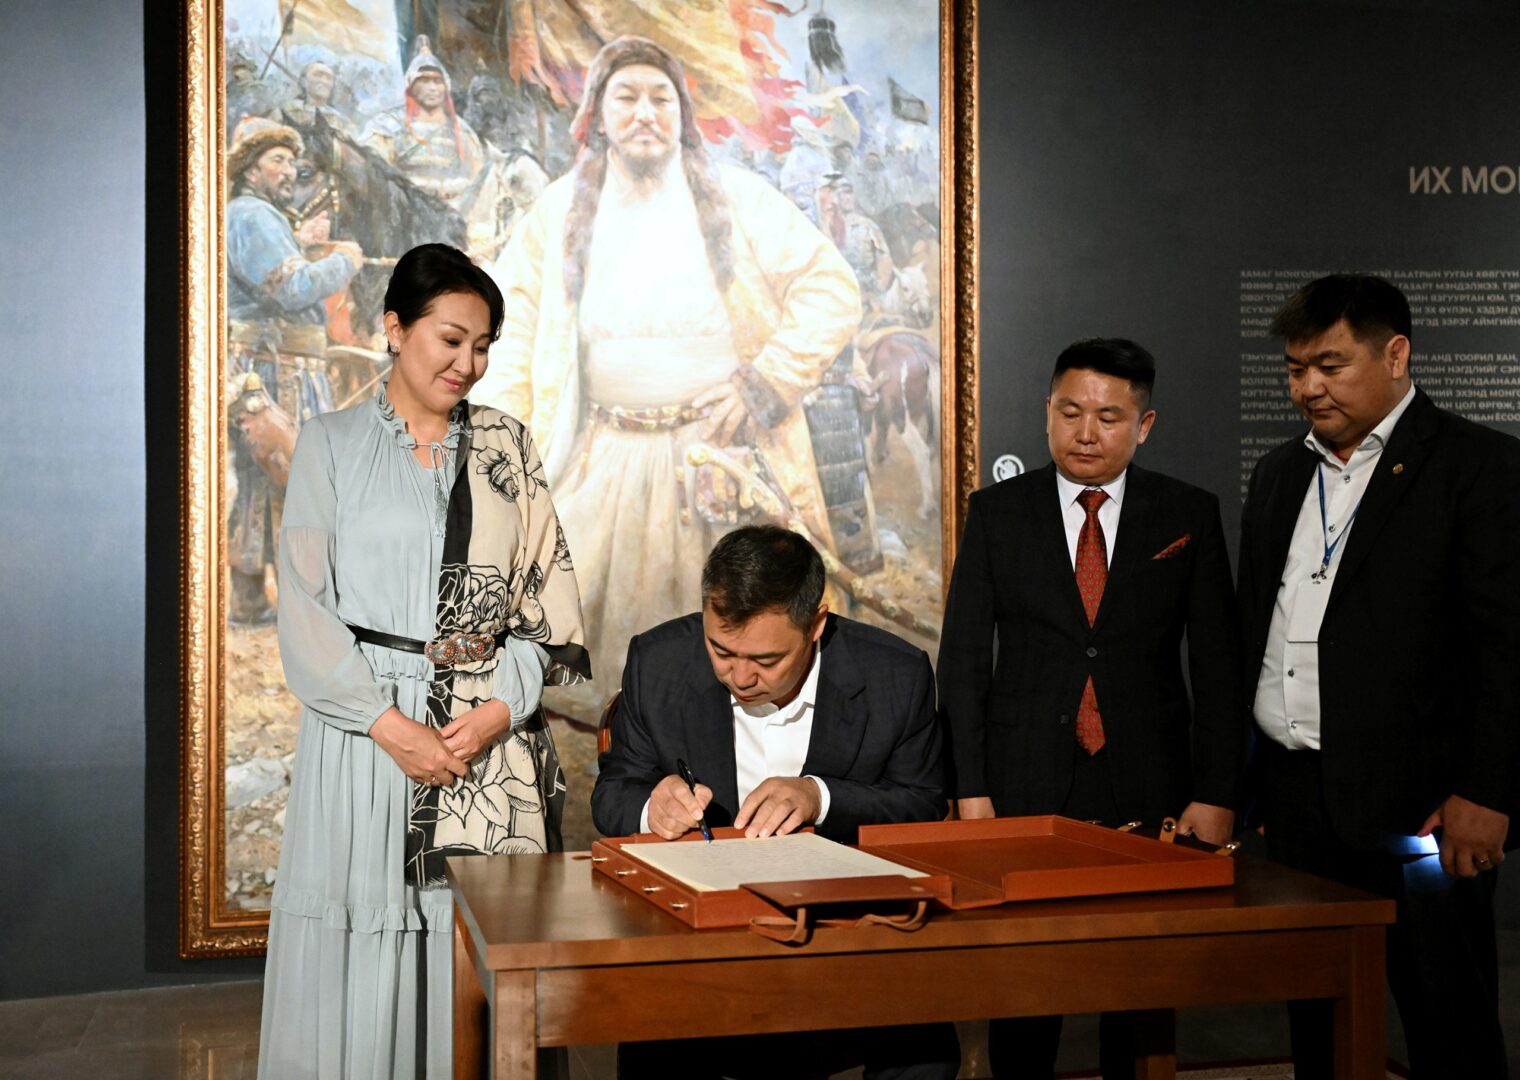 414ced7a cb3c 42df 8c73 771003ebfa1f Садыр Жапаров вместе с супругой посетили музей «Чингисхан» в Улан-Баторе - фото